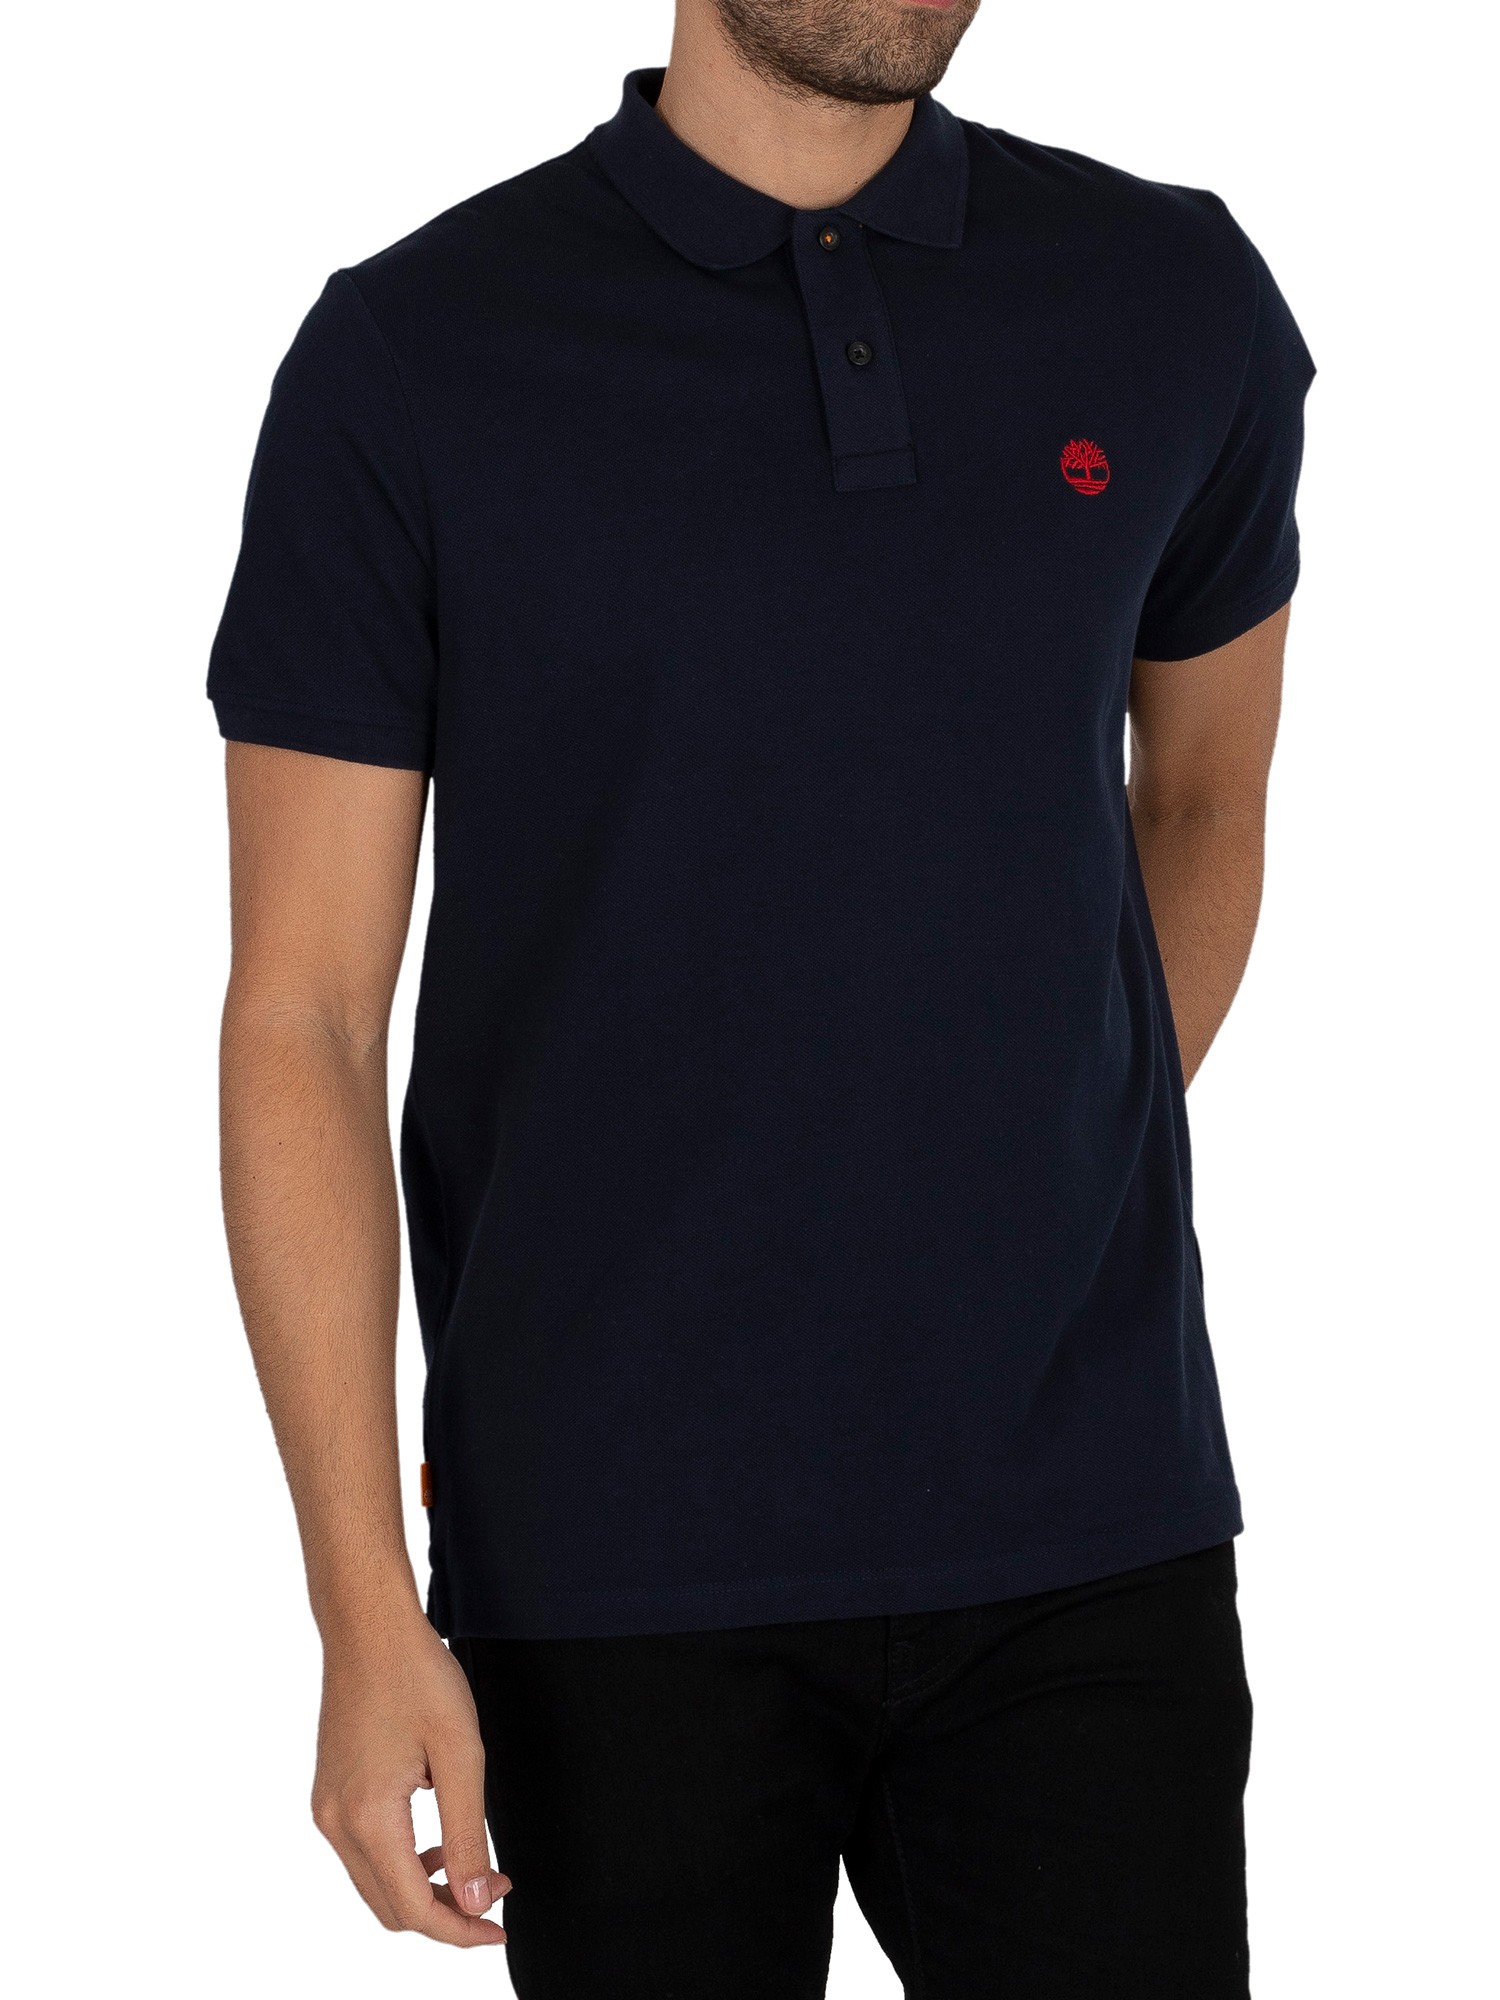 drăguţ feudă Ulise  Timberland Basic Logo Polo Shirt - Dark Sapphire | Standout